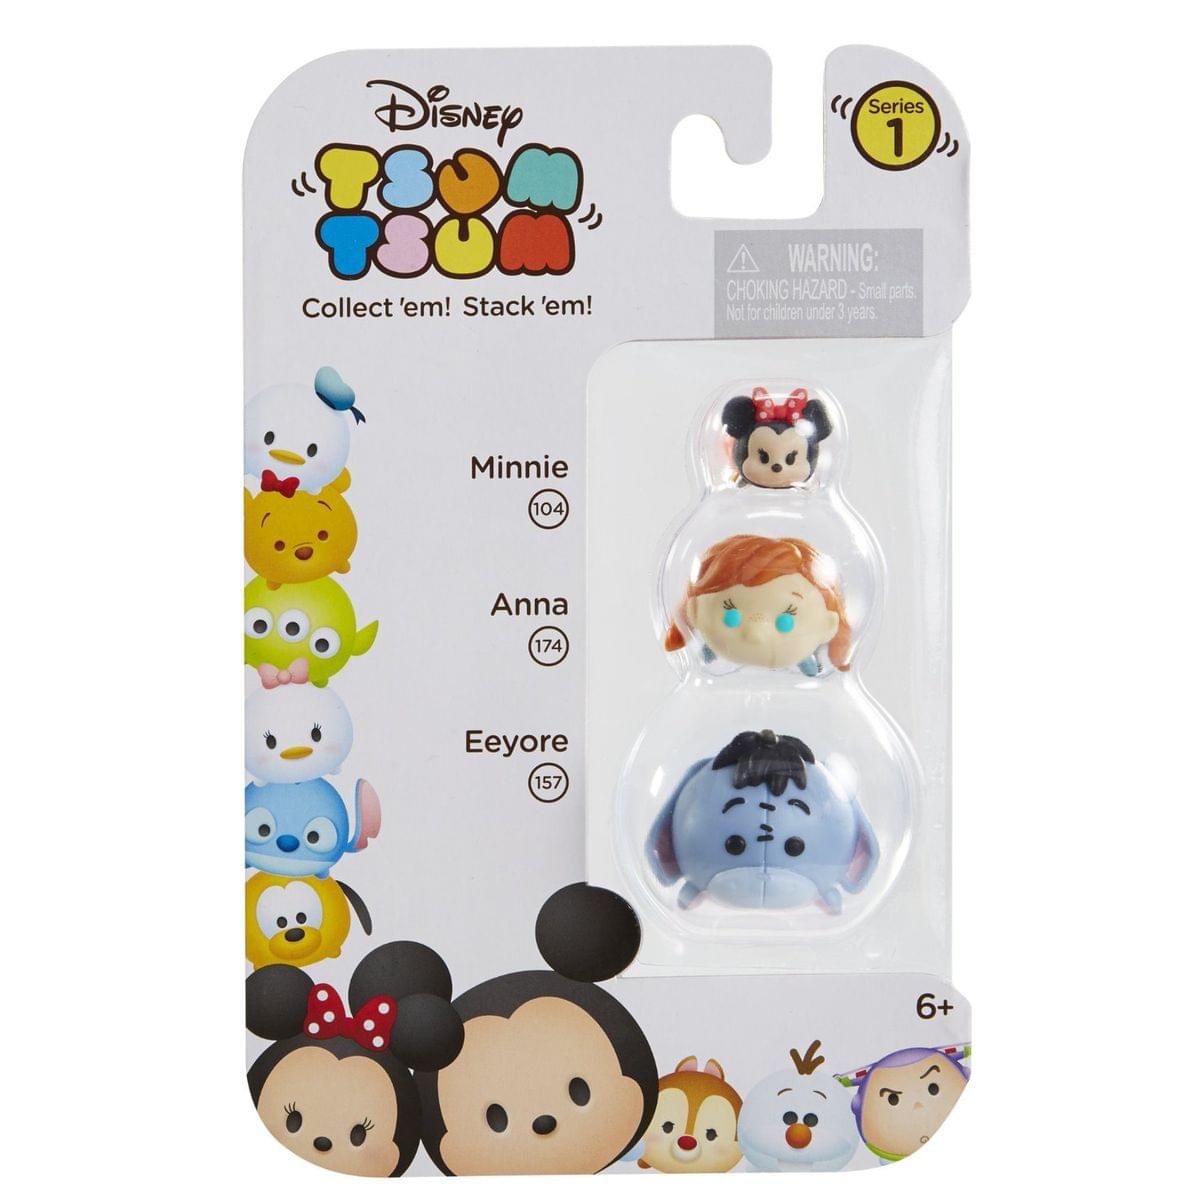 Disney Tsum Tsum 3 Pack: Minnie, Anna, Eeyore